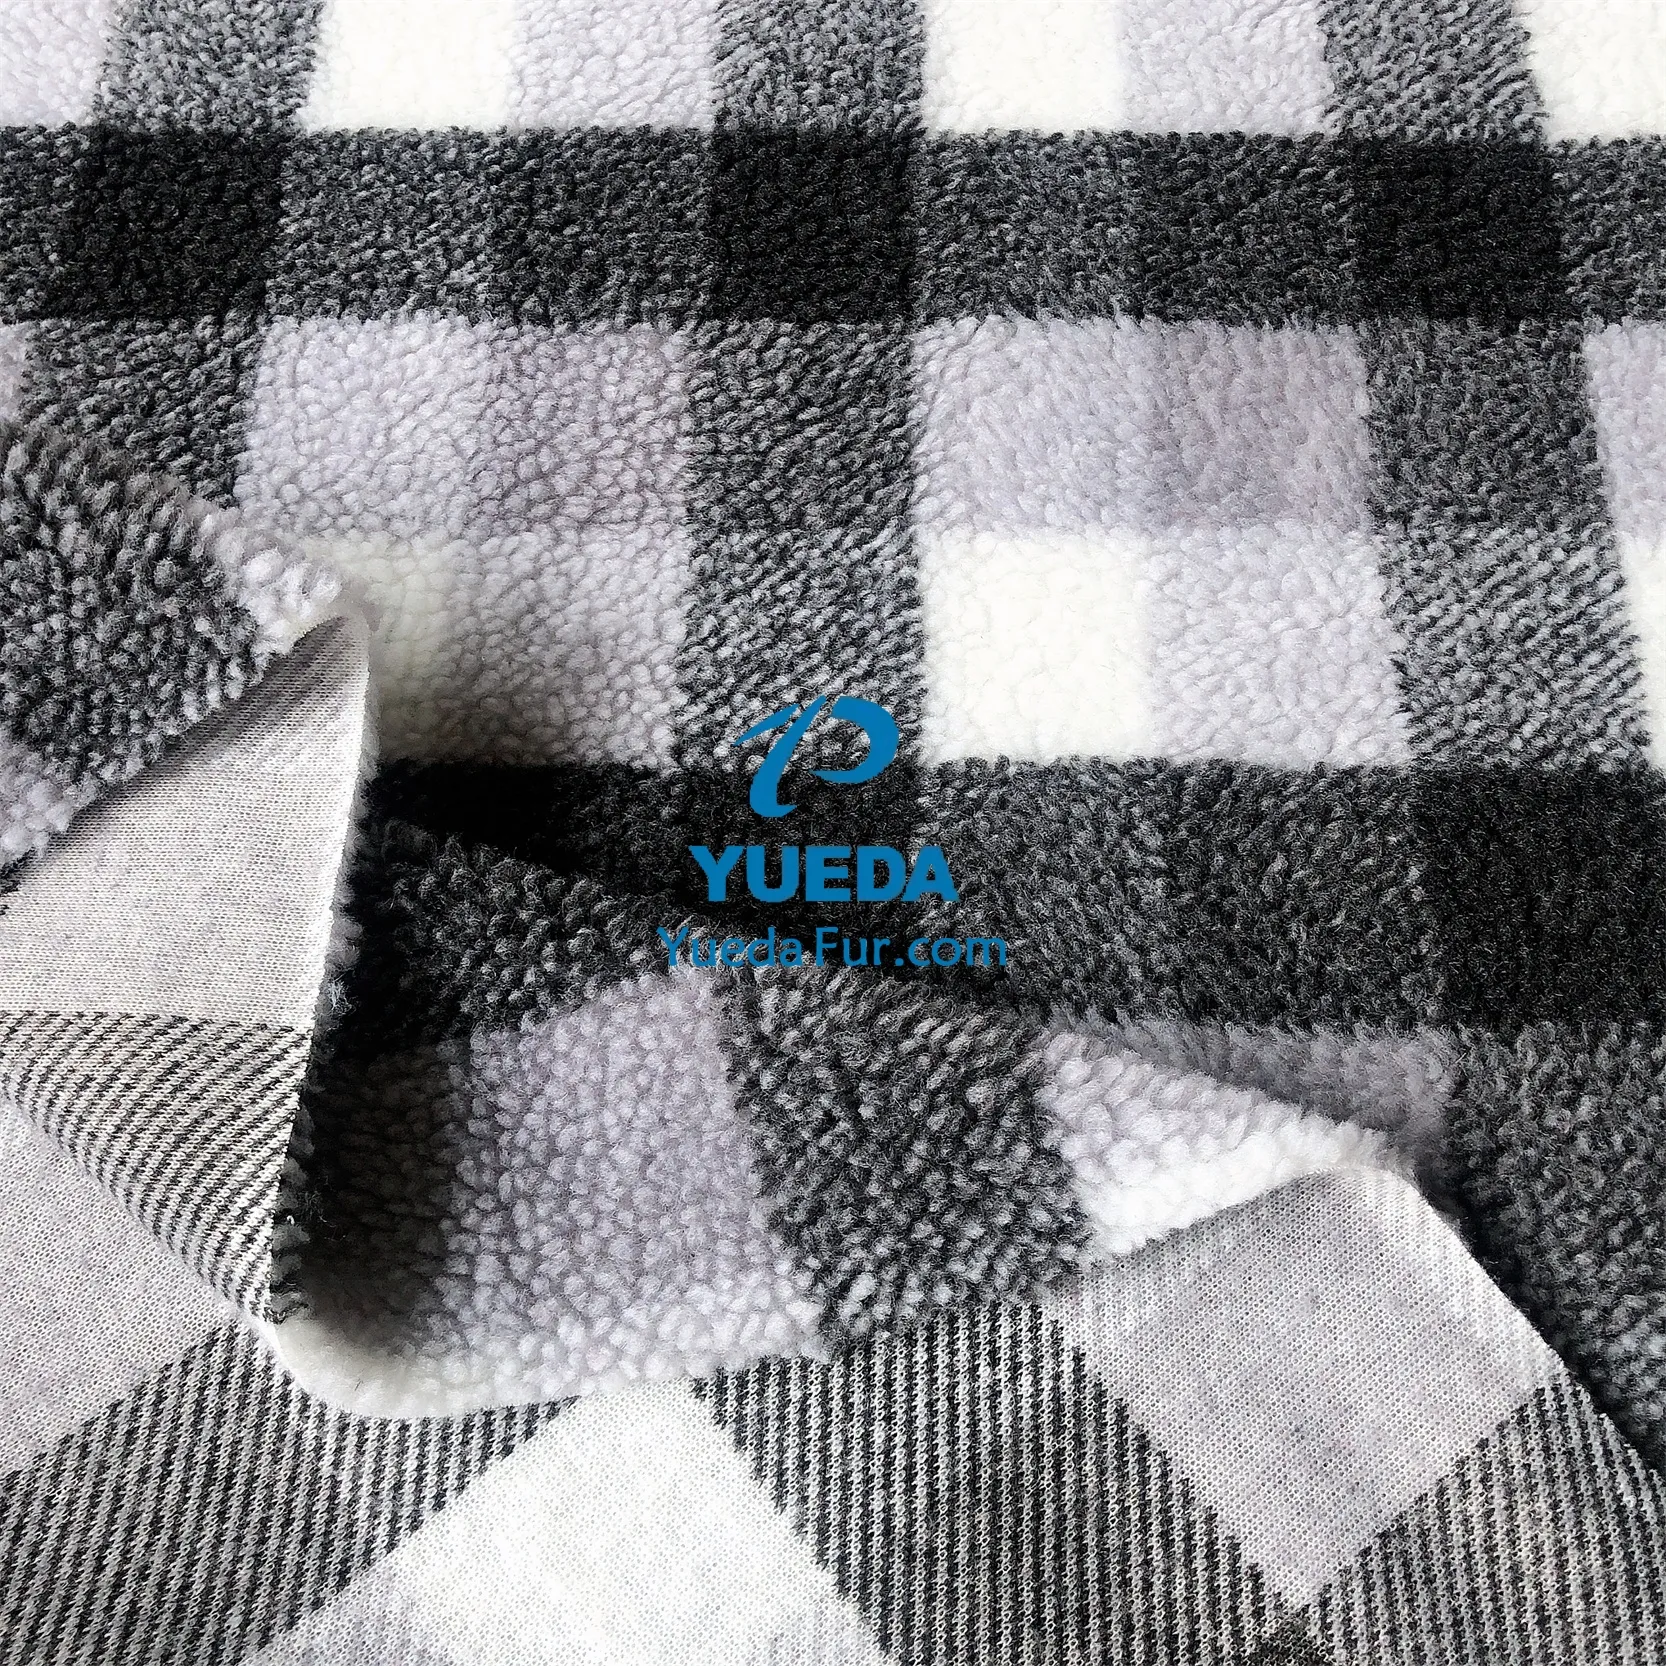 [ YUEDA Fur Factory ] 100% Polyester Check Borg Sherpa Fleece Fur Fabric Color White Light Grey And Dark Grey